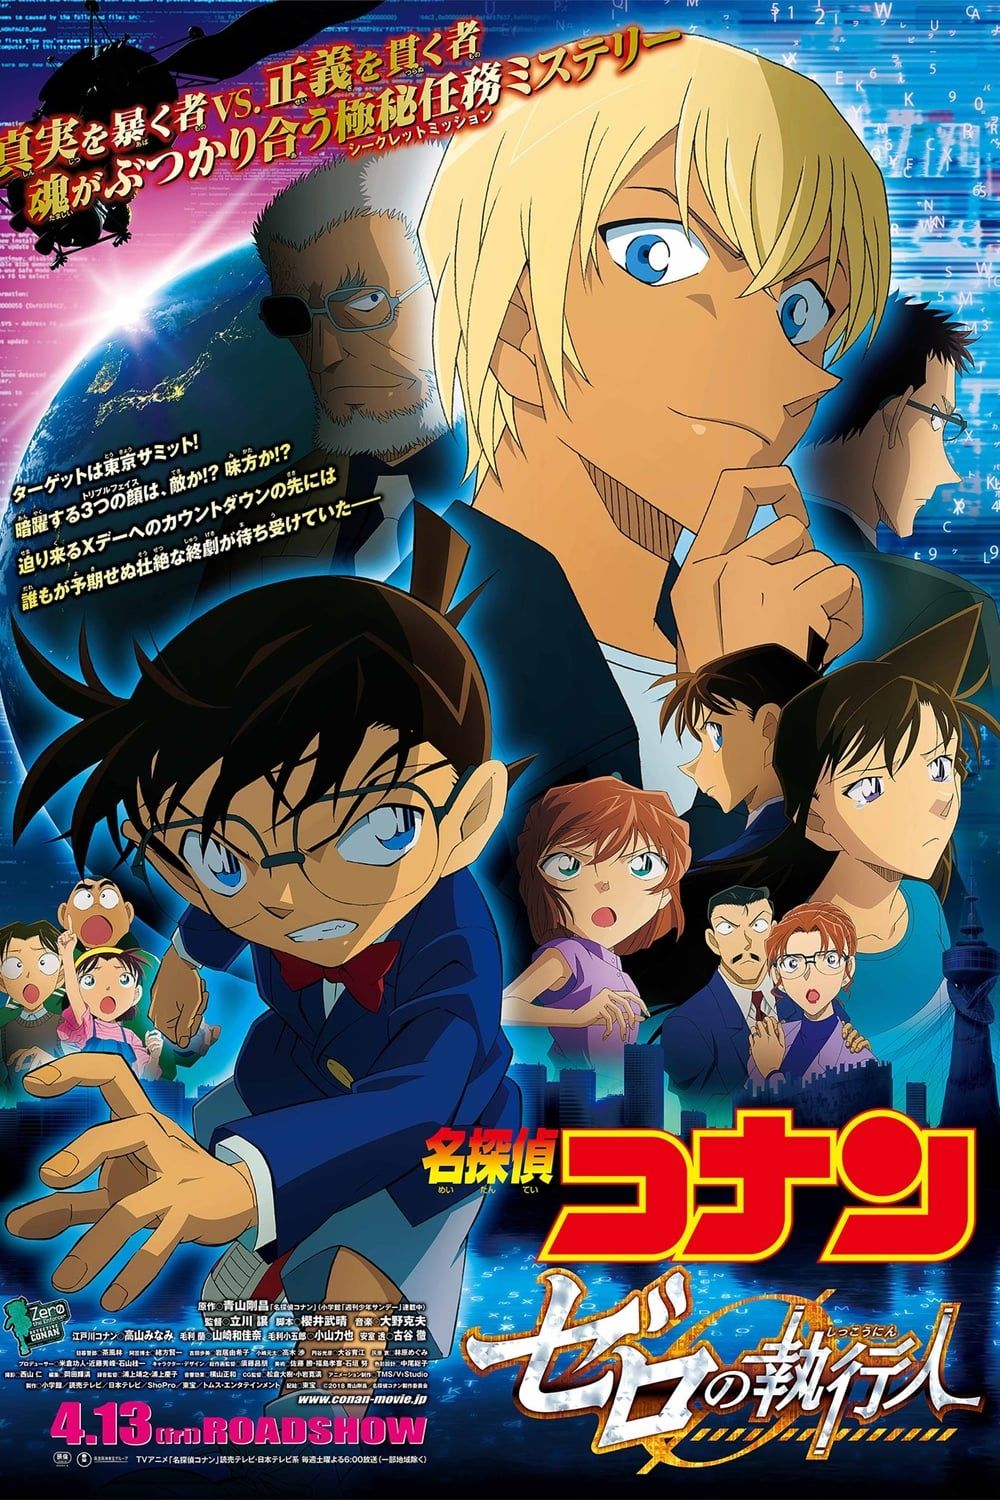 [Part 3] Detective Conan Movie 22: Zero The Enforcer (Movie) (Sub)